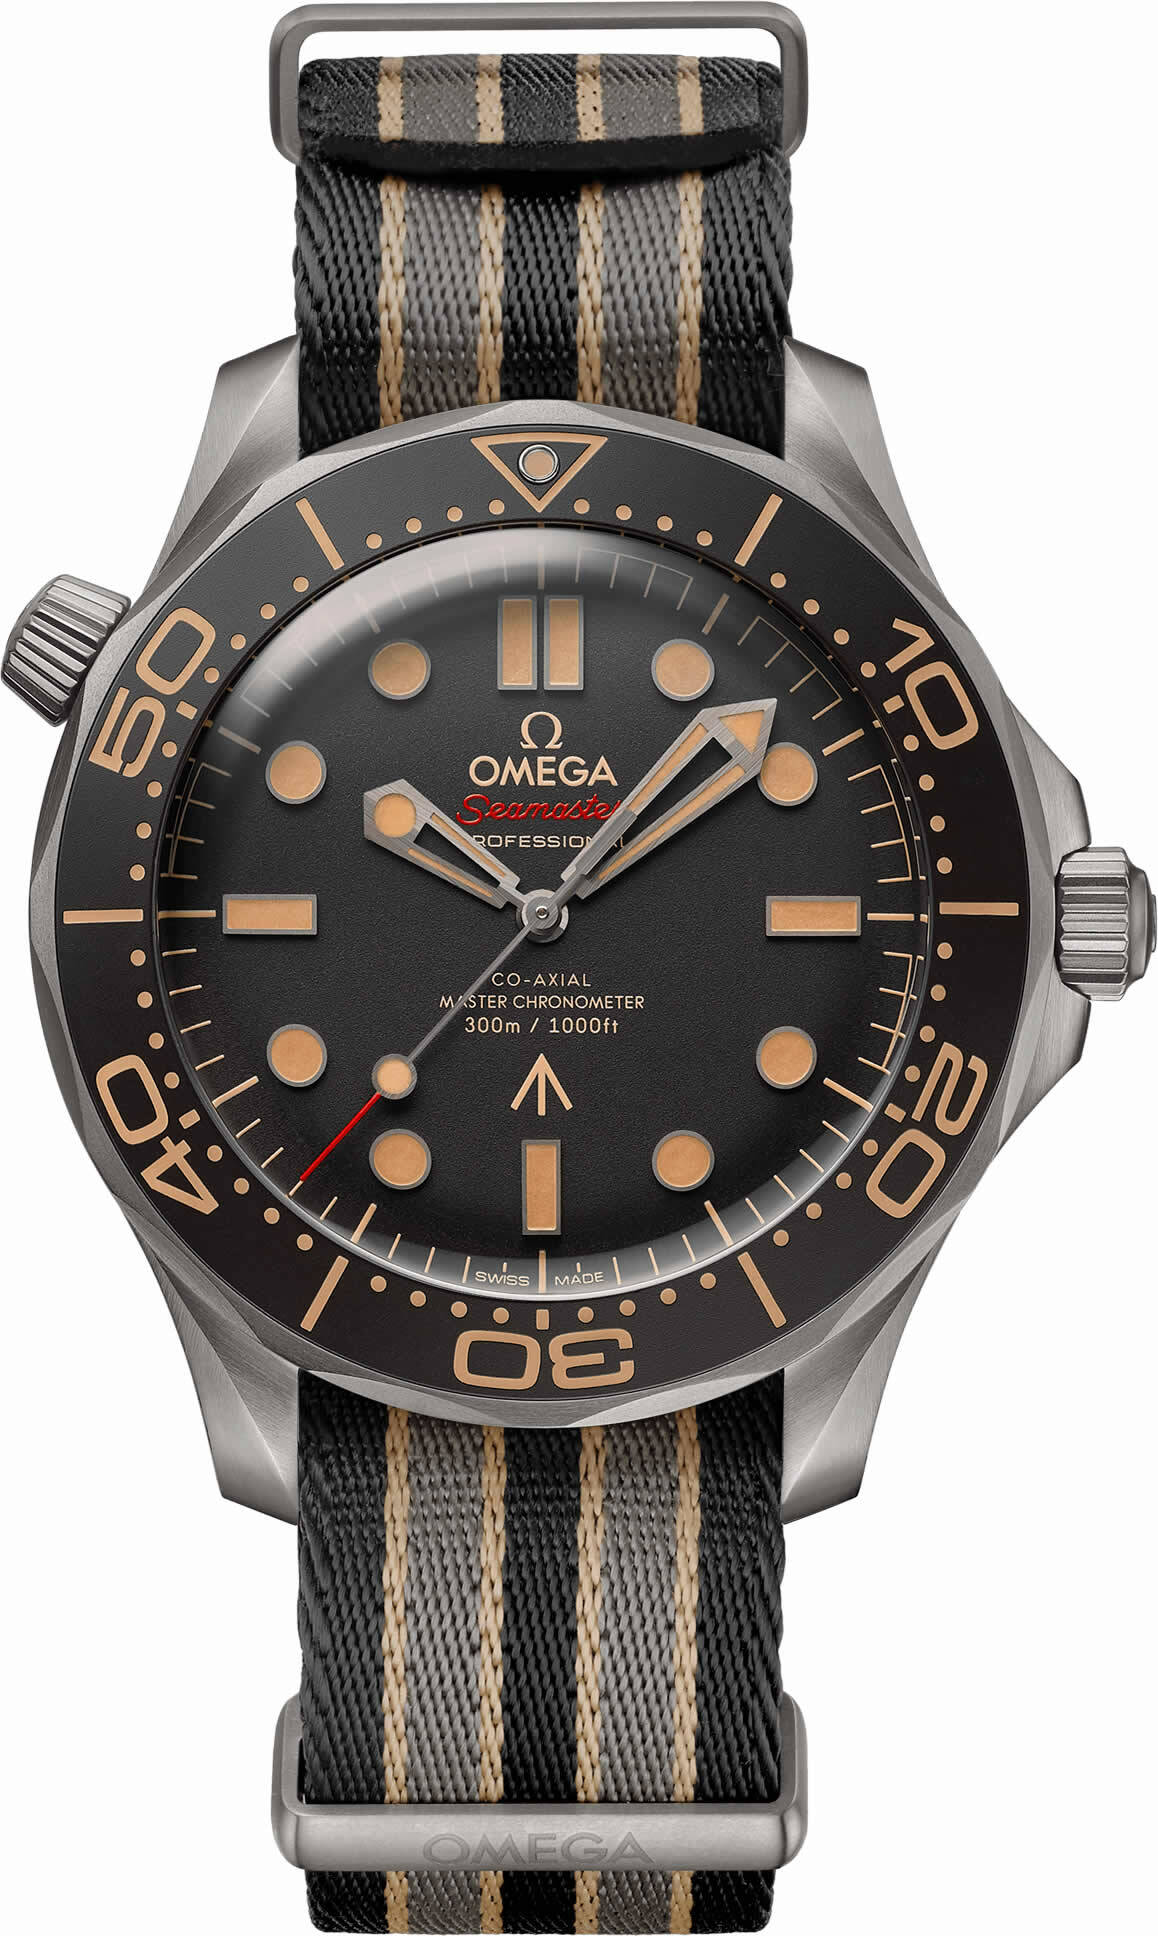 Omega Seamaster Diver 300m 007 James Bond Edition on NATO Strap - Exquisite  Timepieces